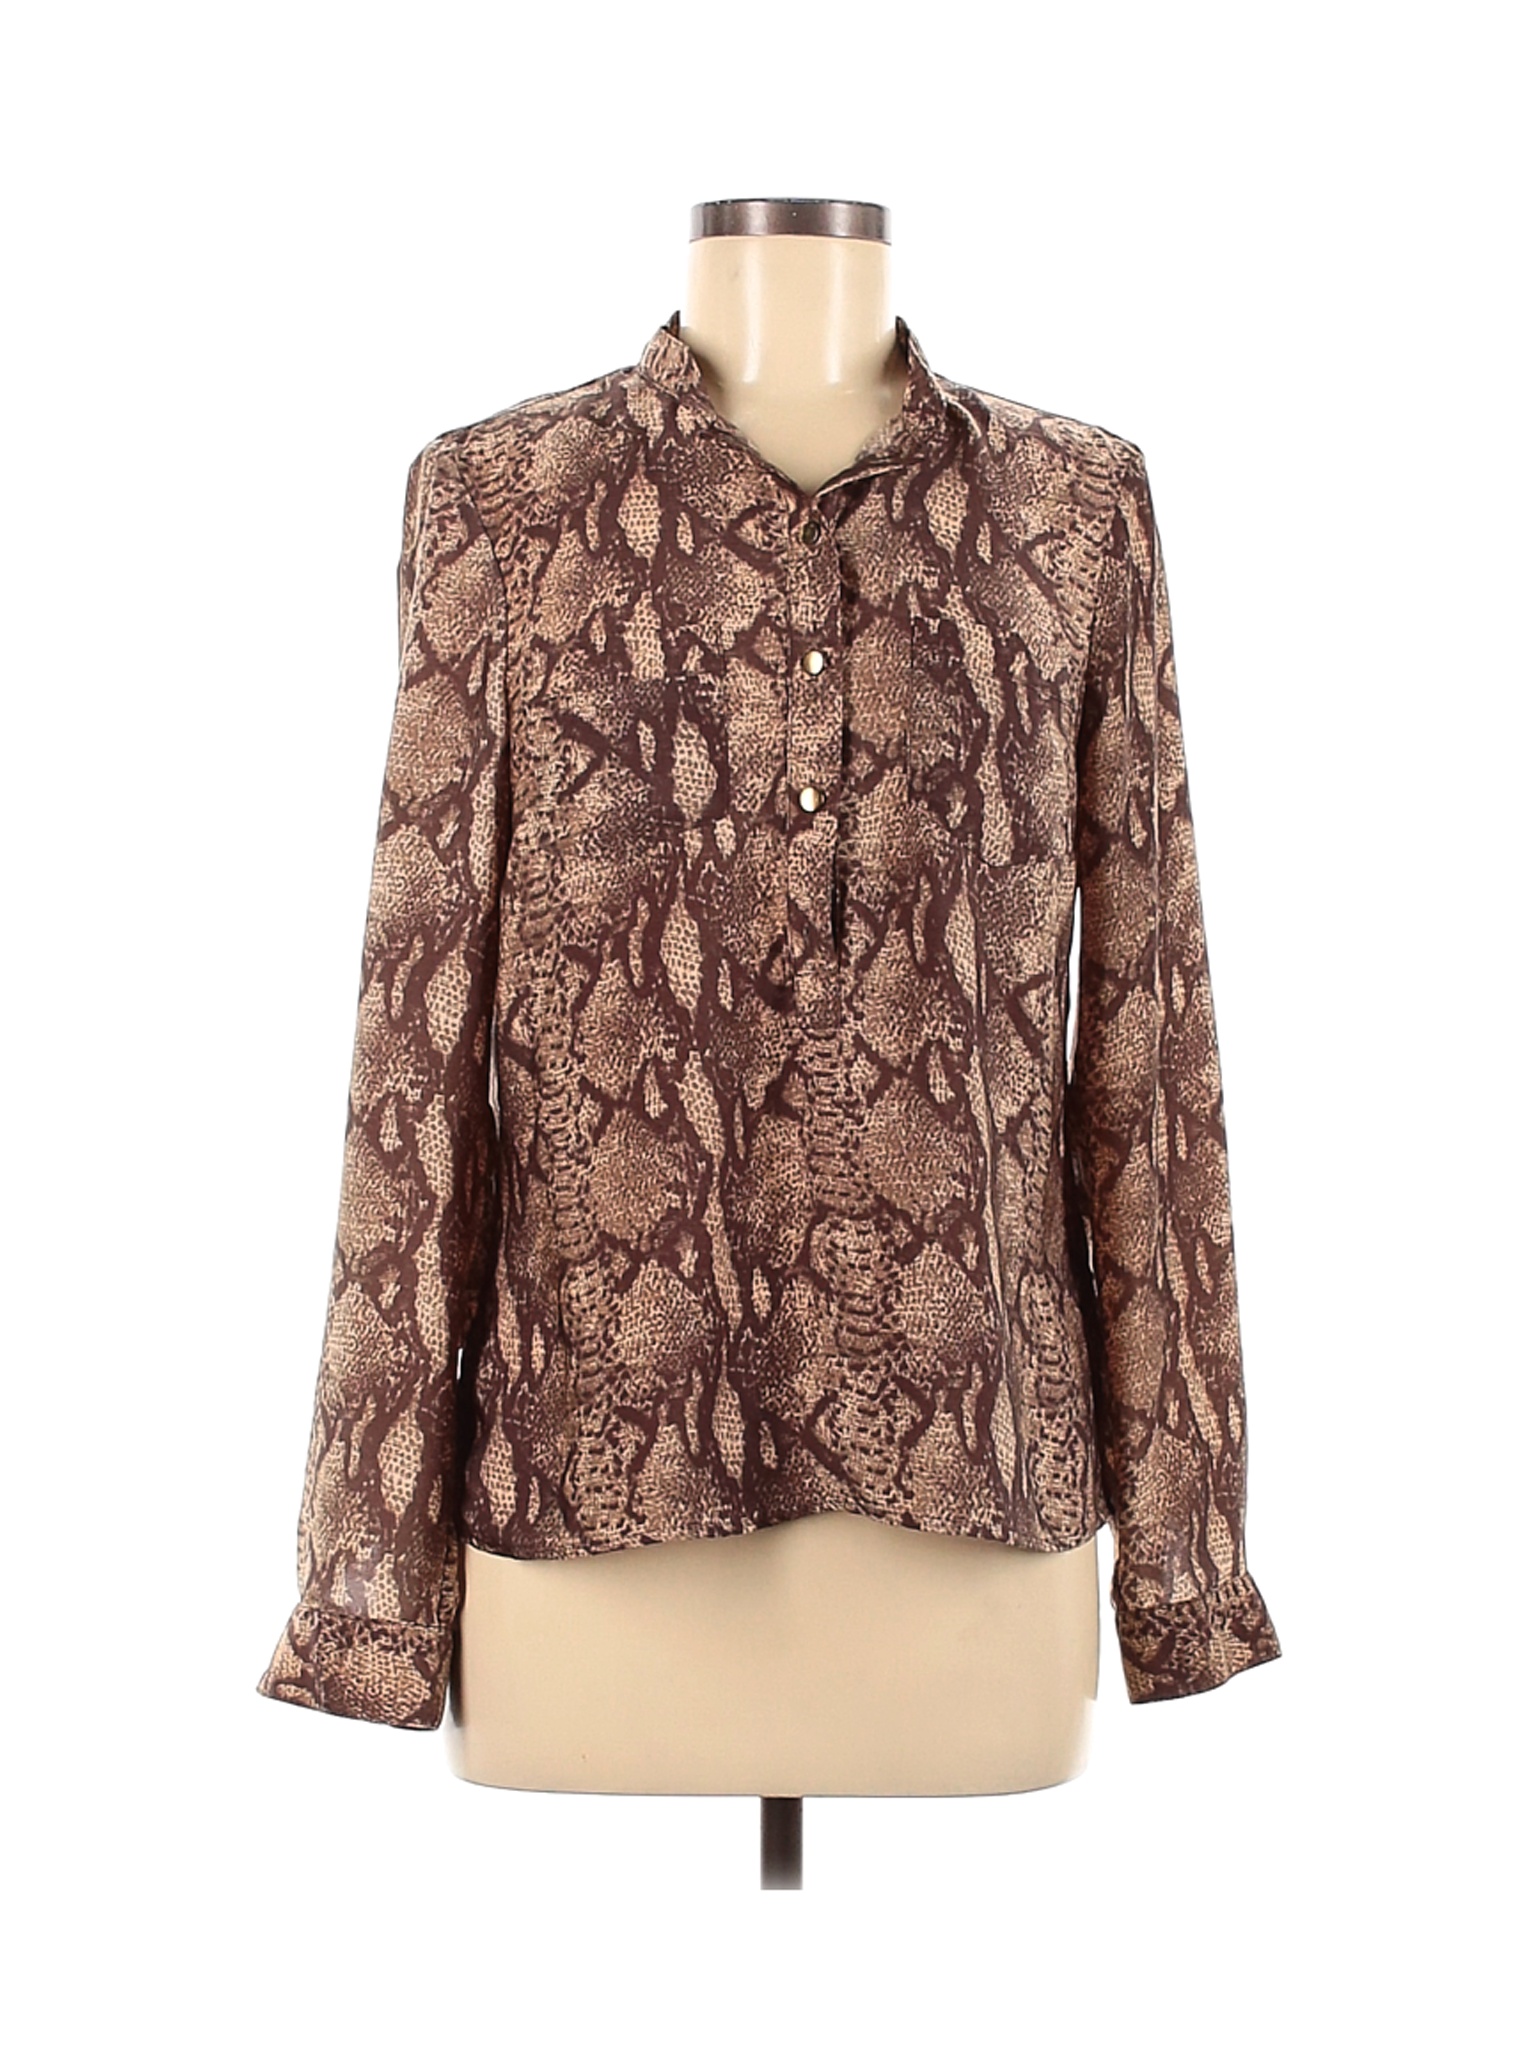 H&M Women Brown Long Sleeve Blouse 6 | eBay